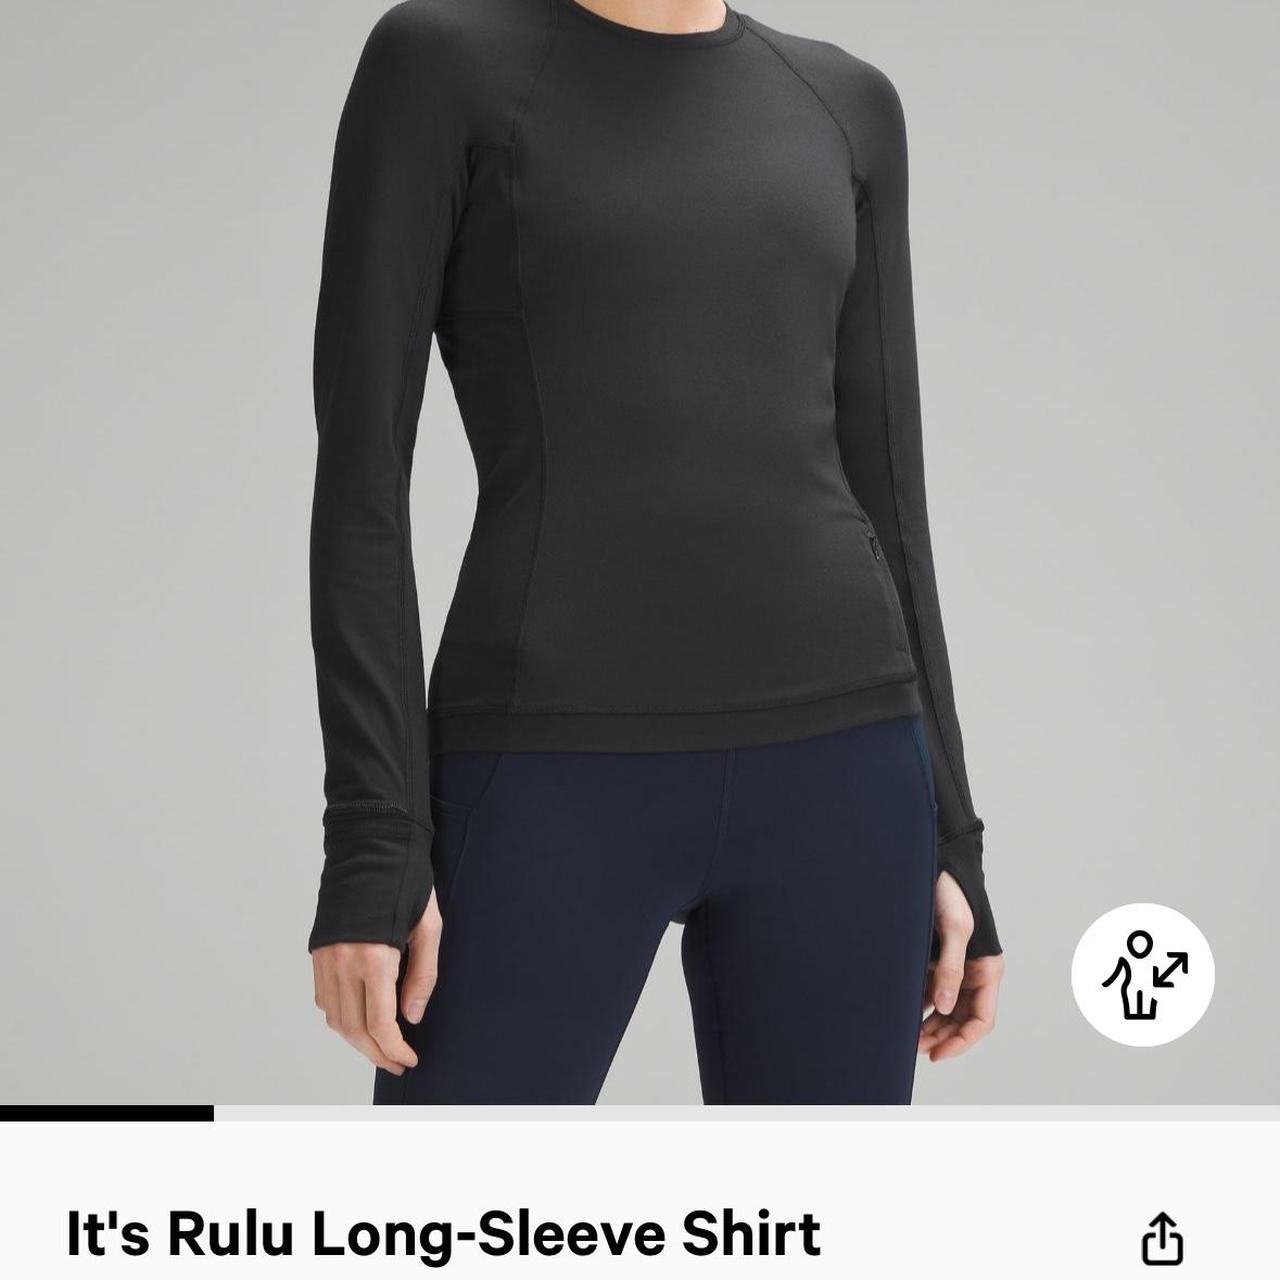 It's Rulu Long-Sleeve Shirt